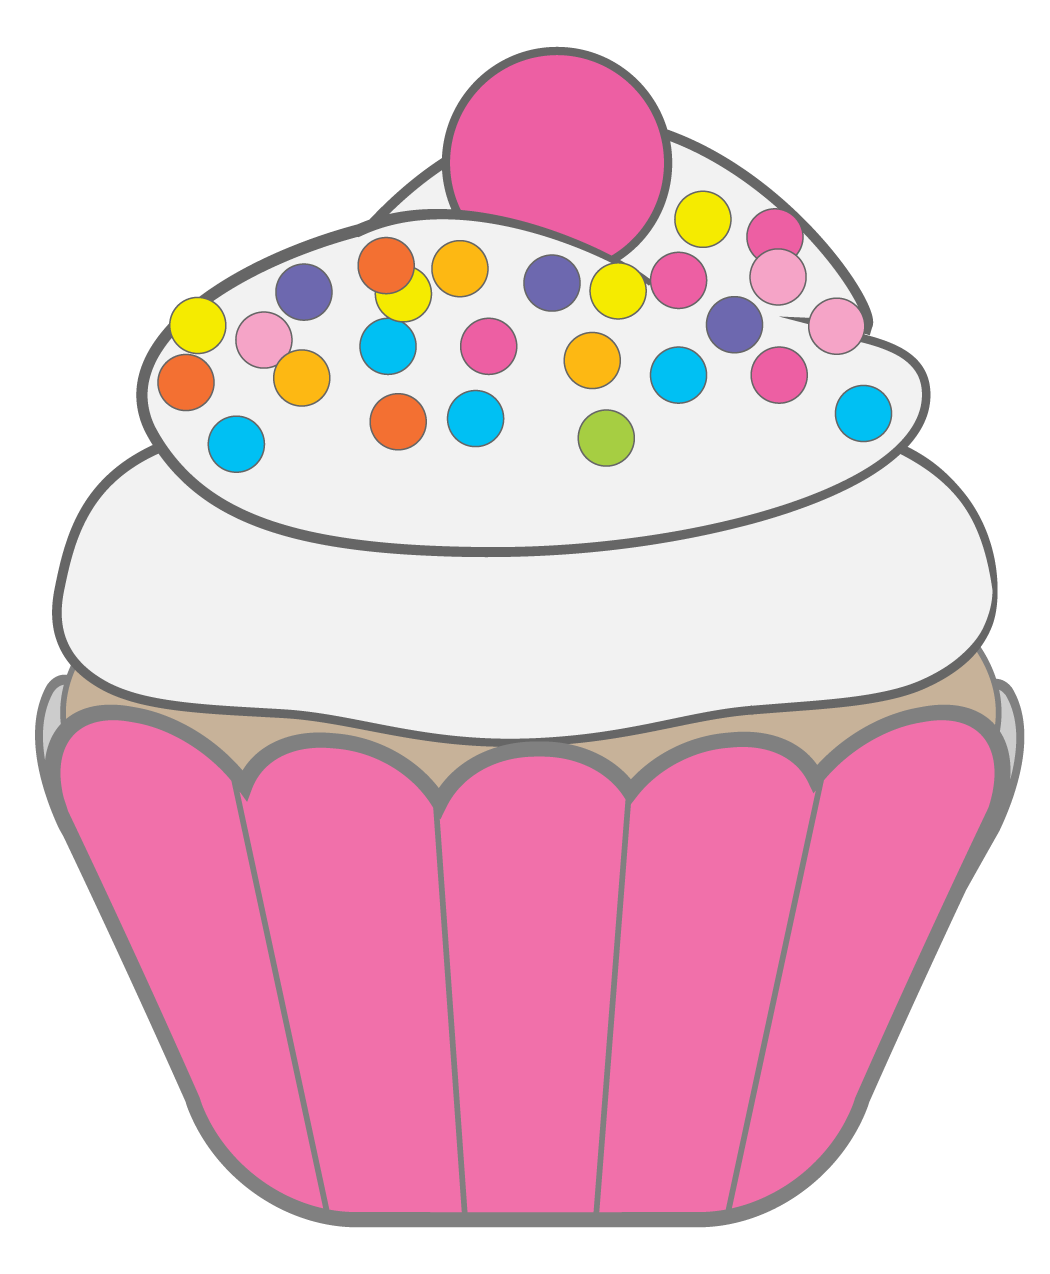 Lushous Cupcakes Network